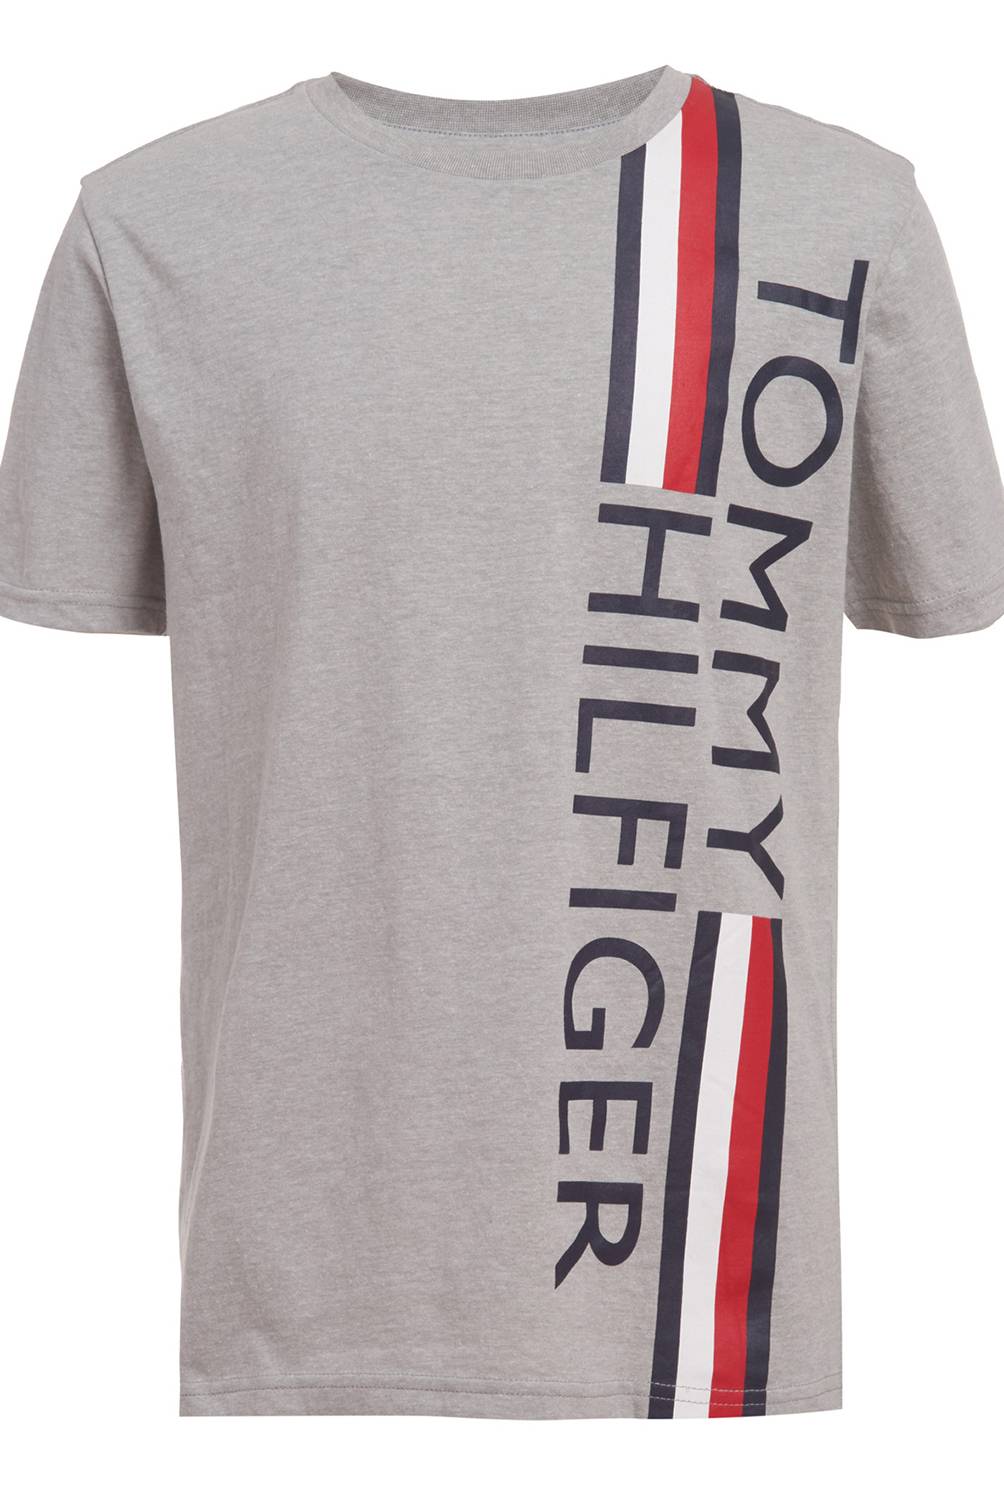 TOMMY HILFIGER - Camiseta Niño Tommy Hilfiger